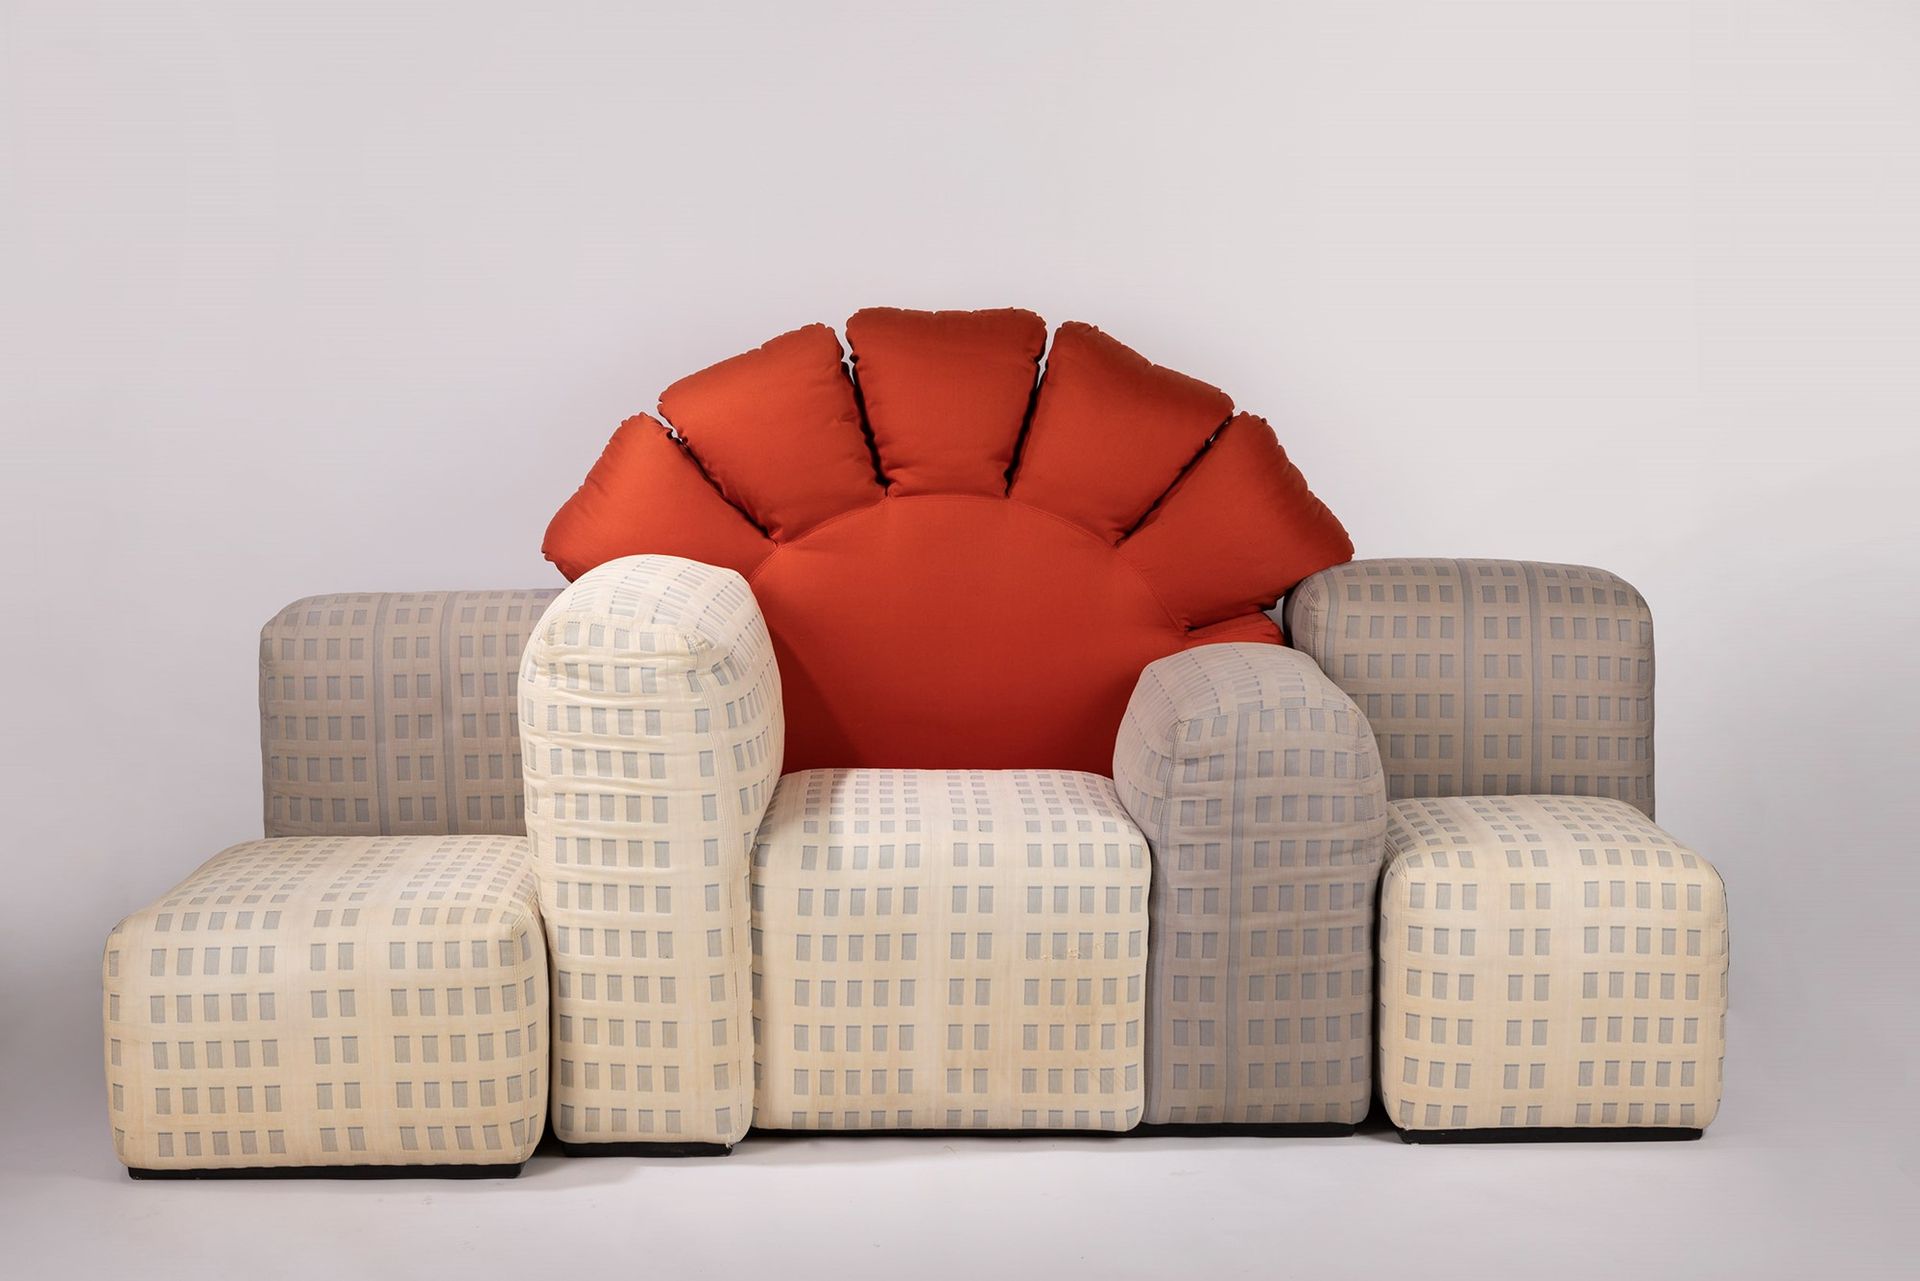 GAETANO PESCE 纽约的日落，1984年

h 120 x 225 x 106 cm
模块化沙发，共生产42件。塑料材料，木材，软体织物。卡西纳制造。&hellip;